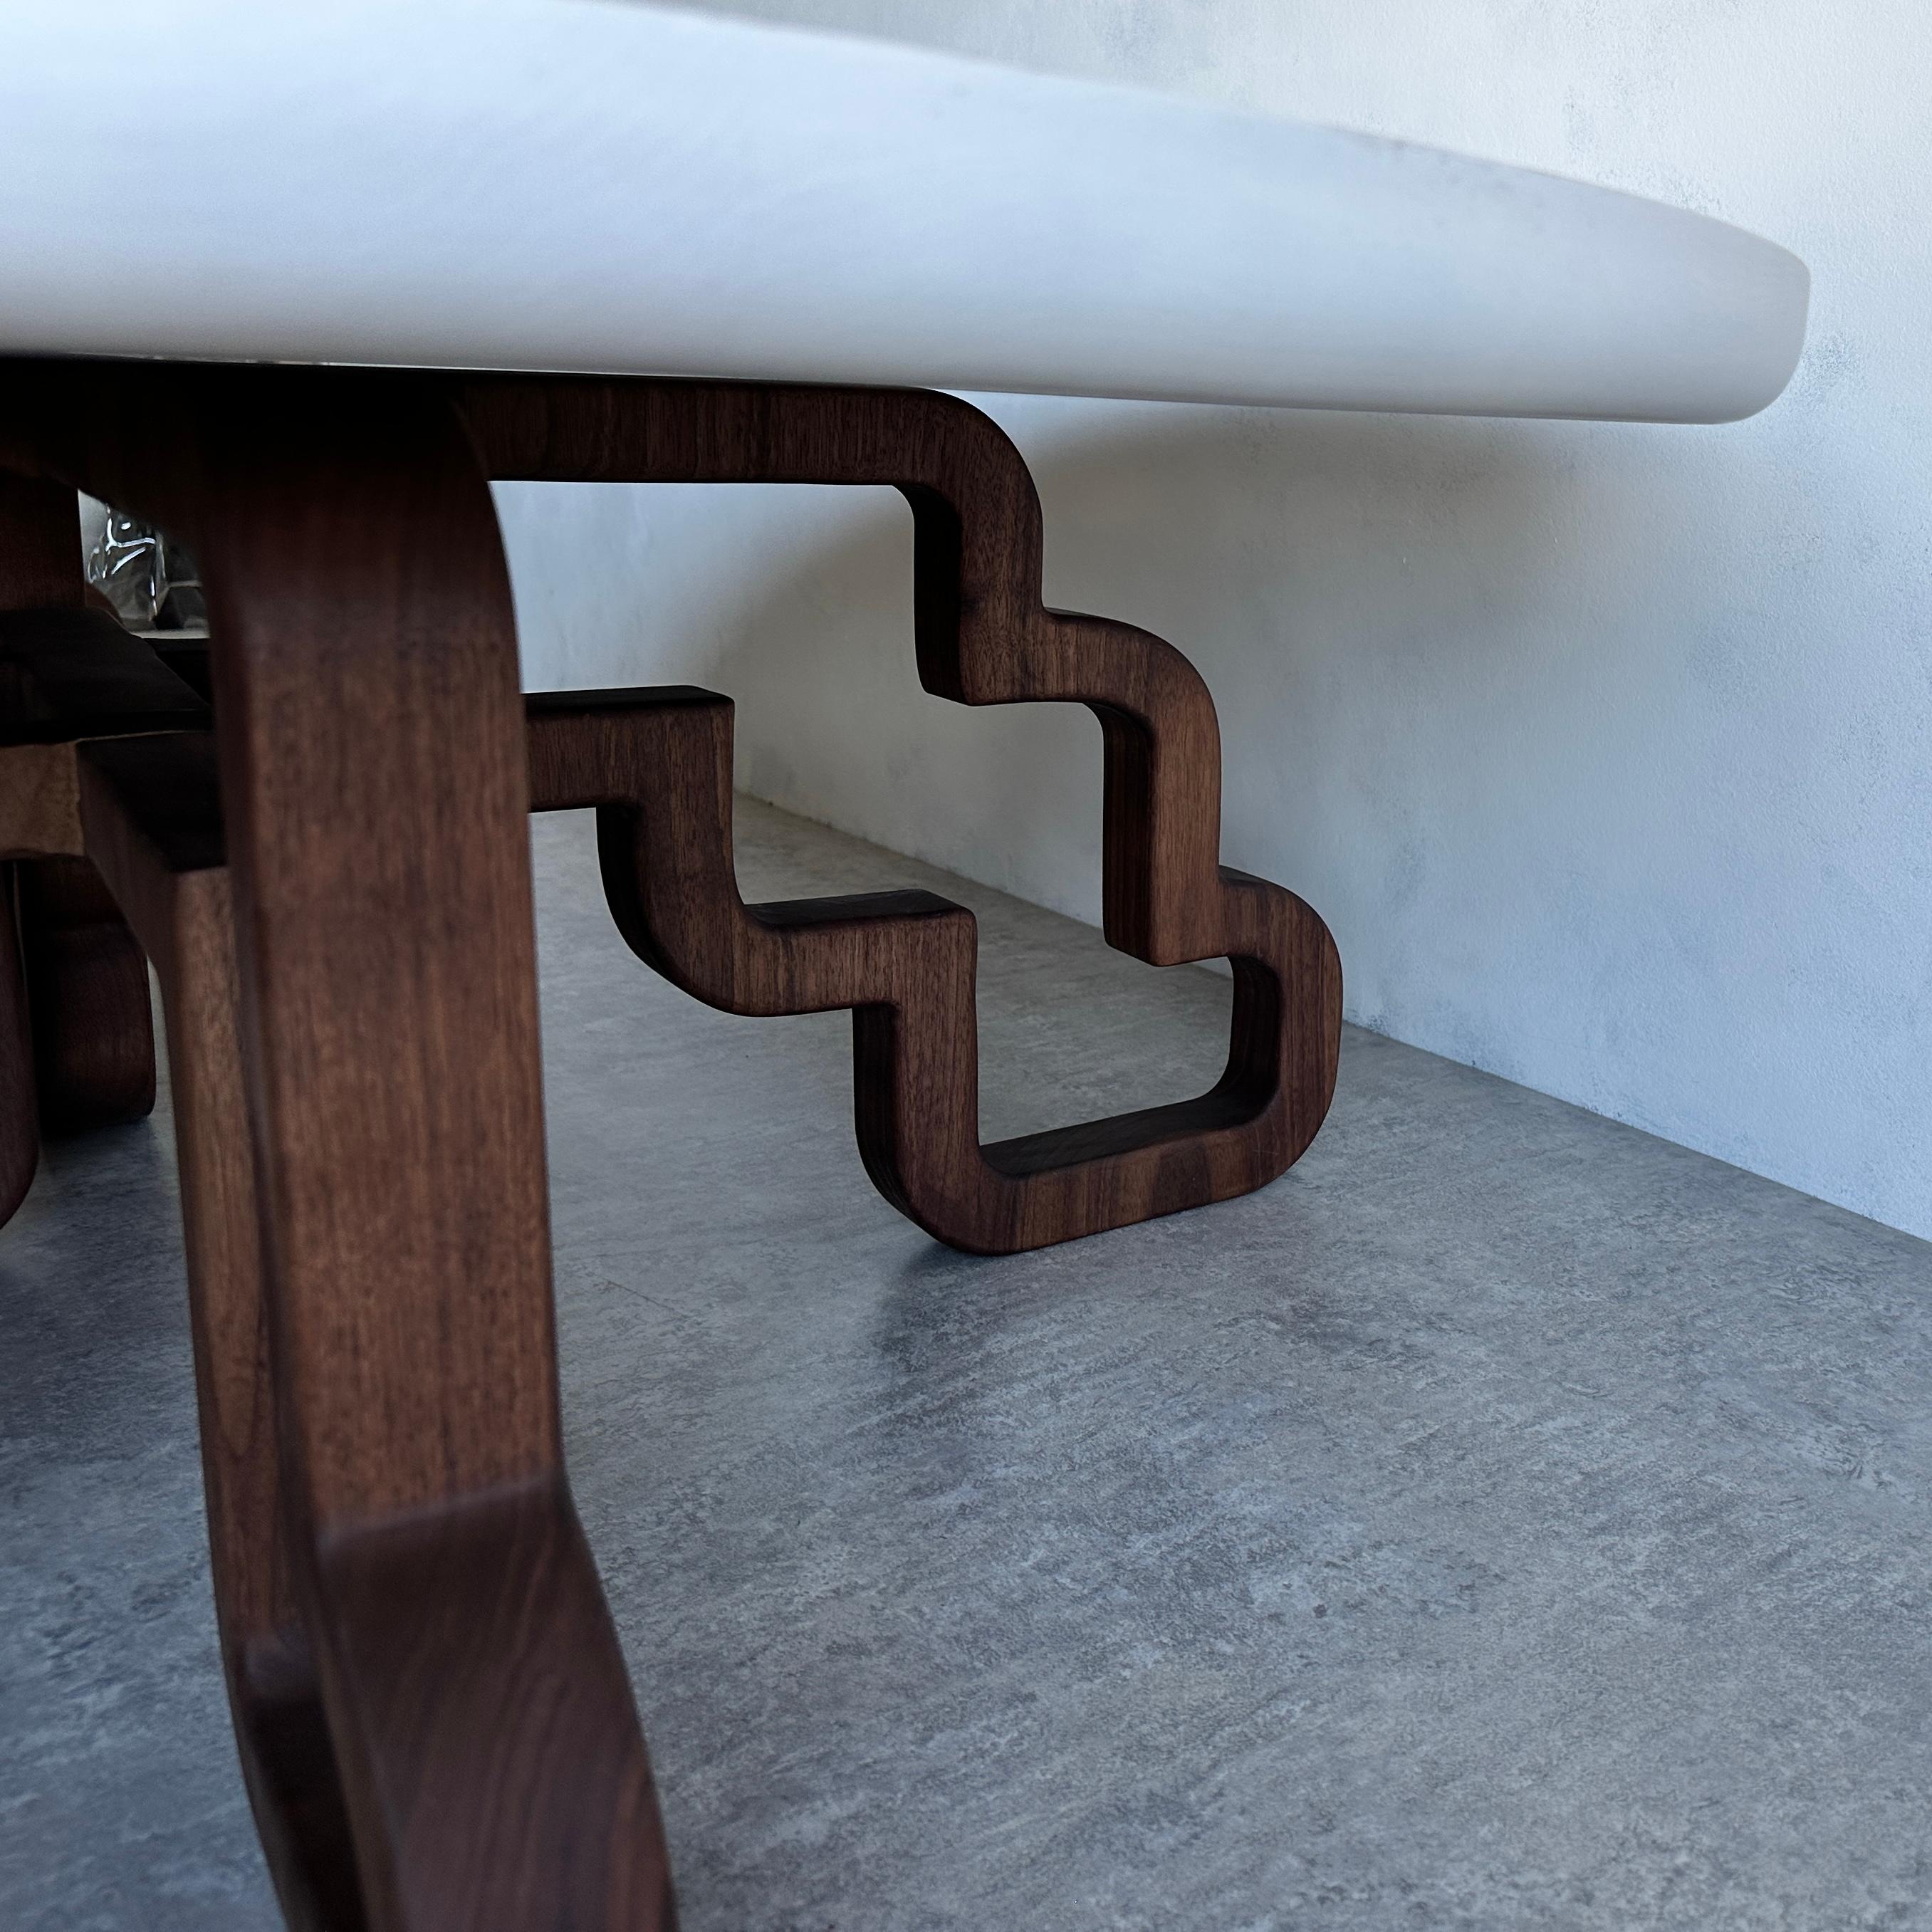 Maple Many Feet Periphery Coffee Table by MSJ Furniture Studio